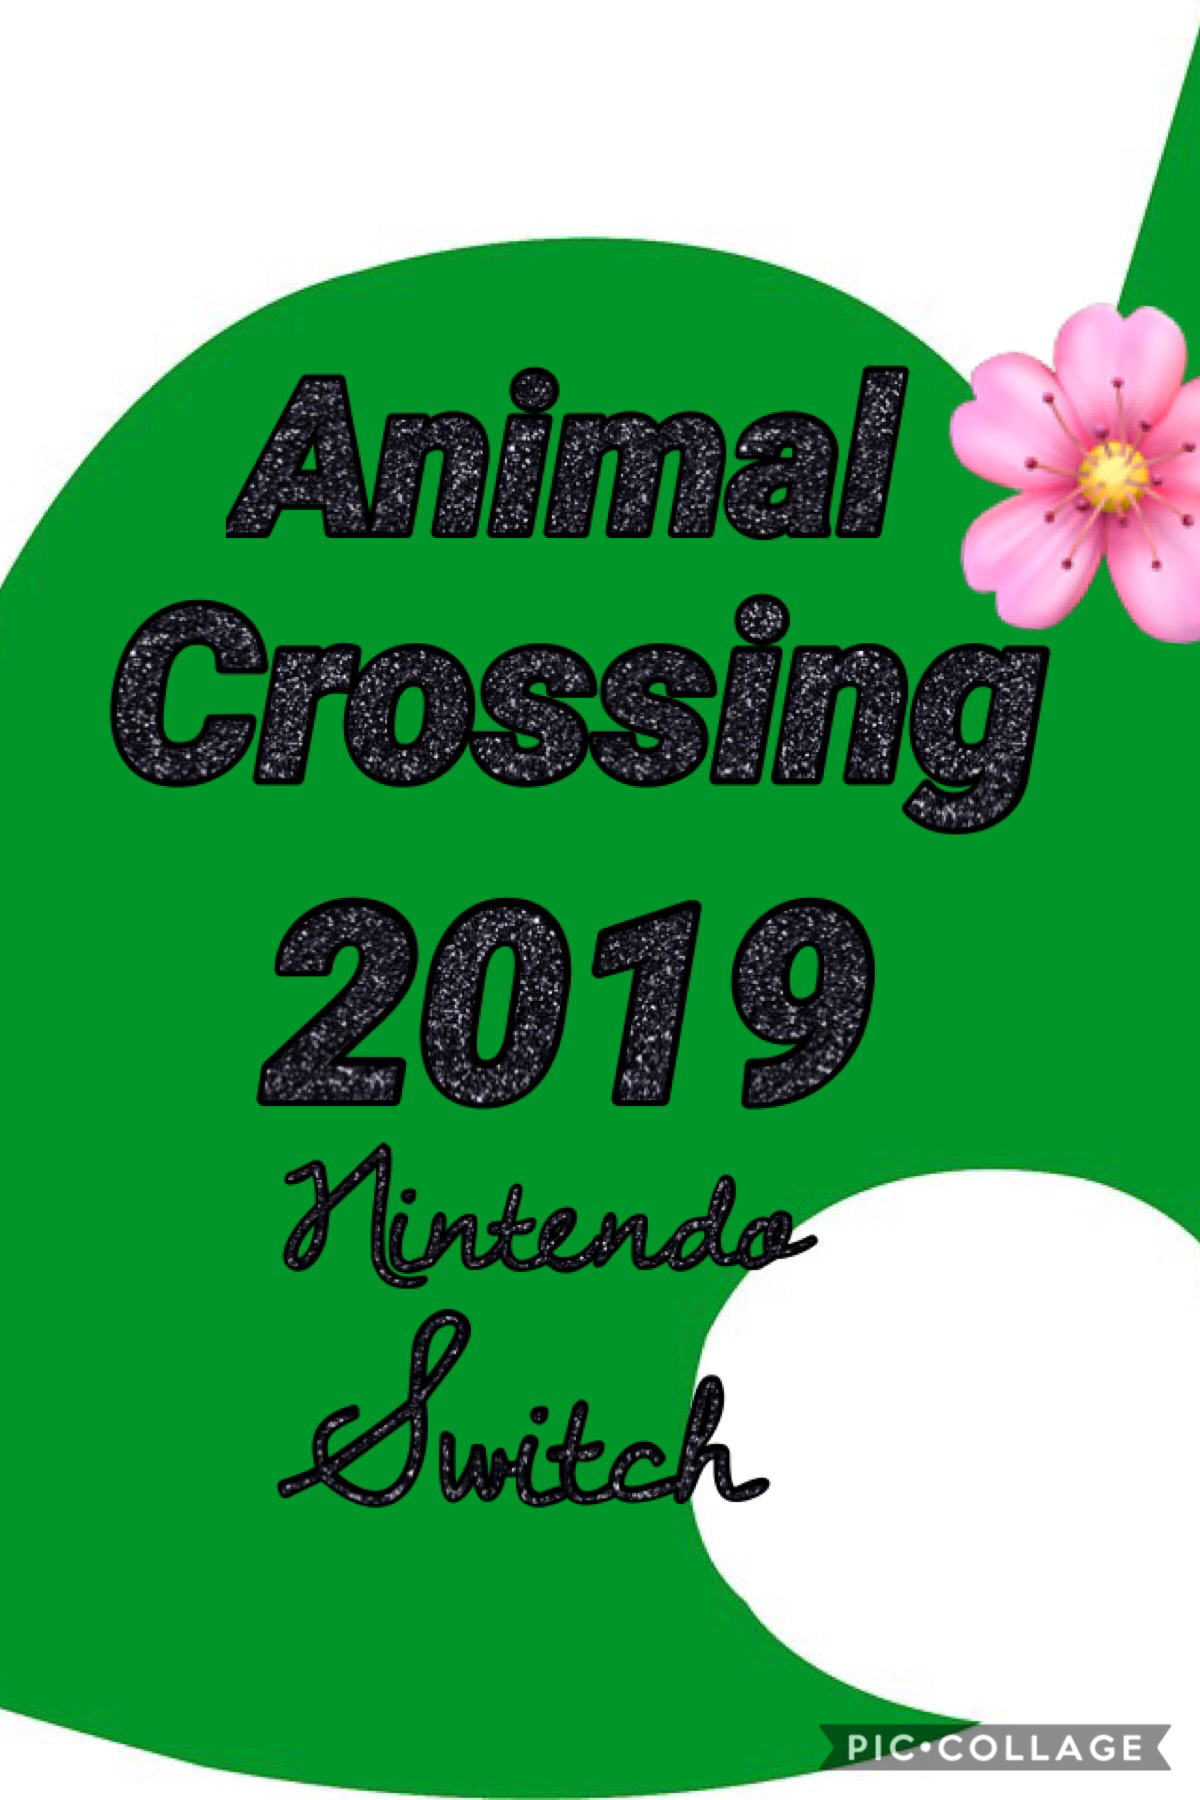 Animal Crossing 2019!!!
YASS